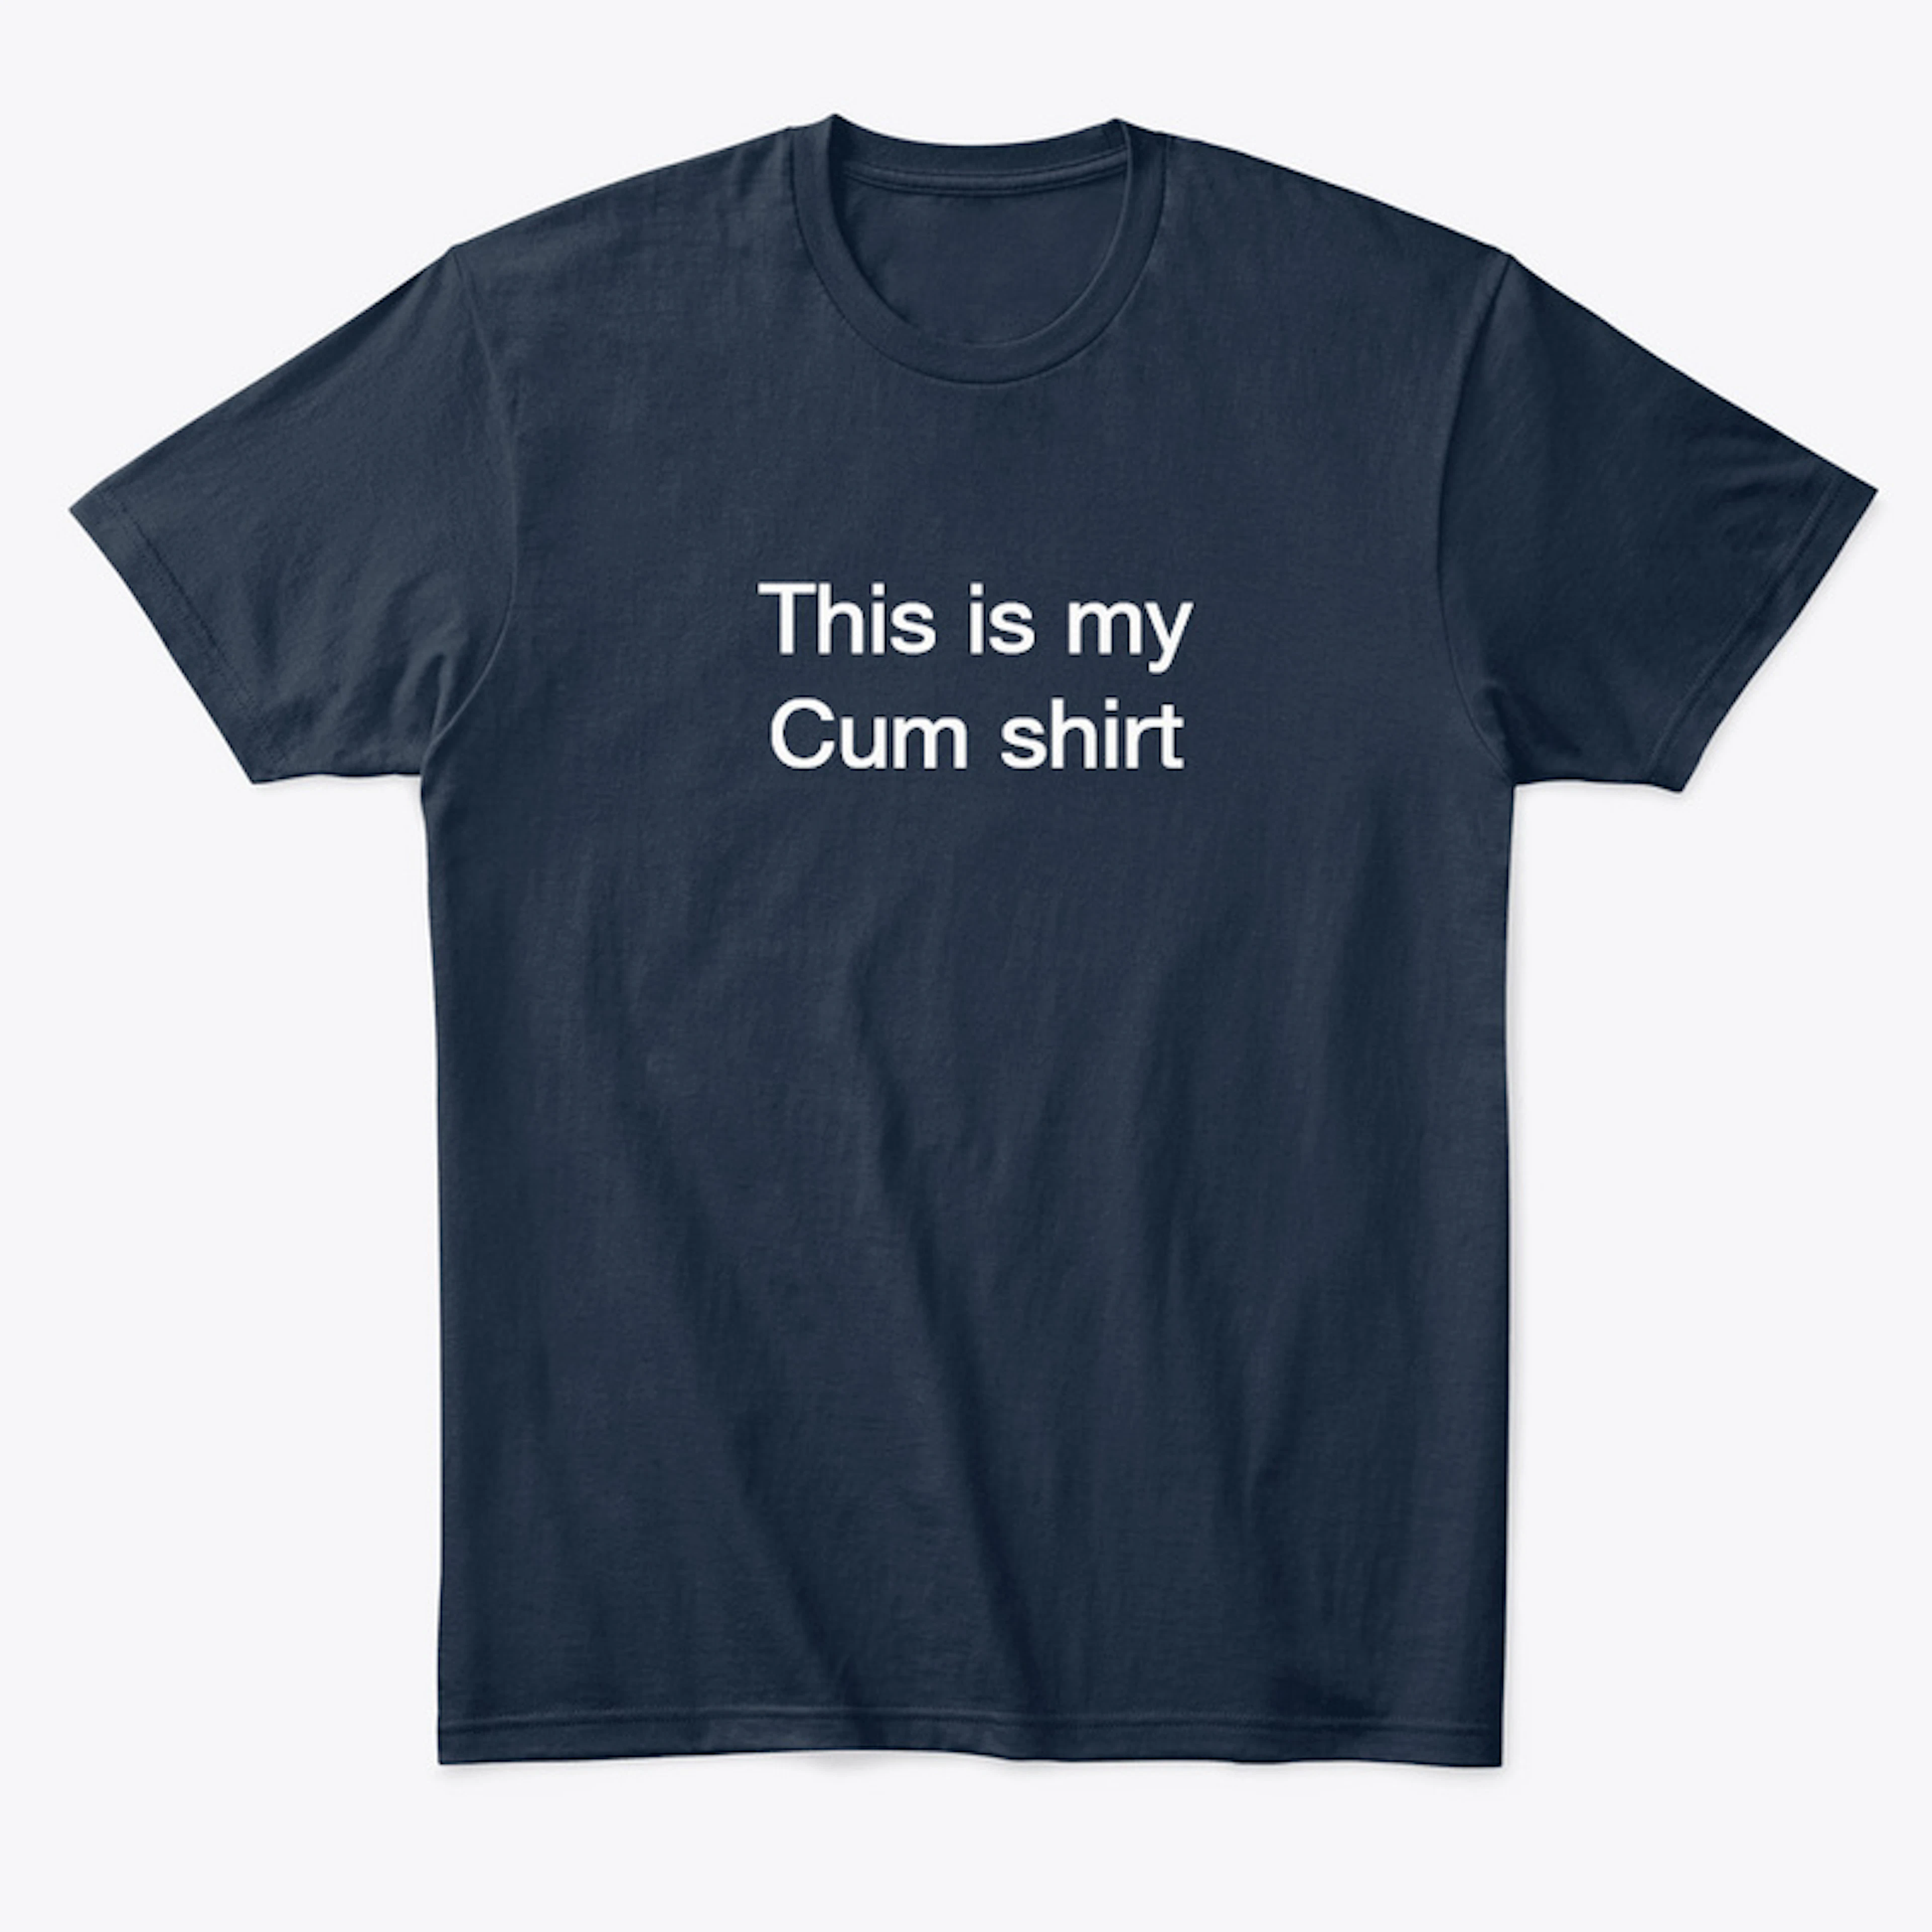 This is my cum shirt